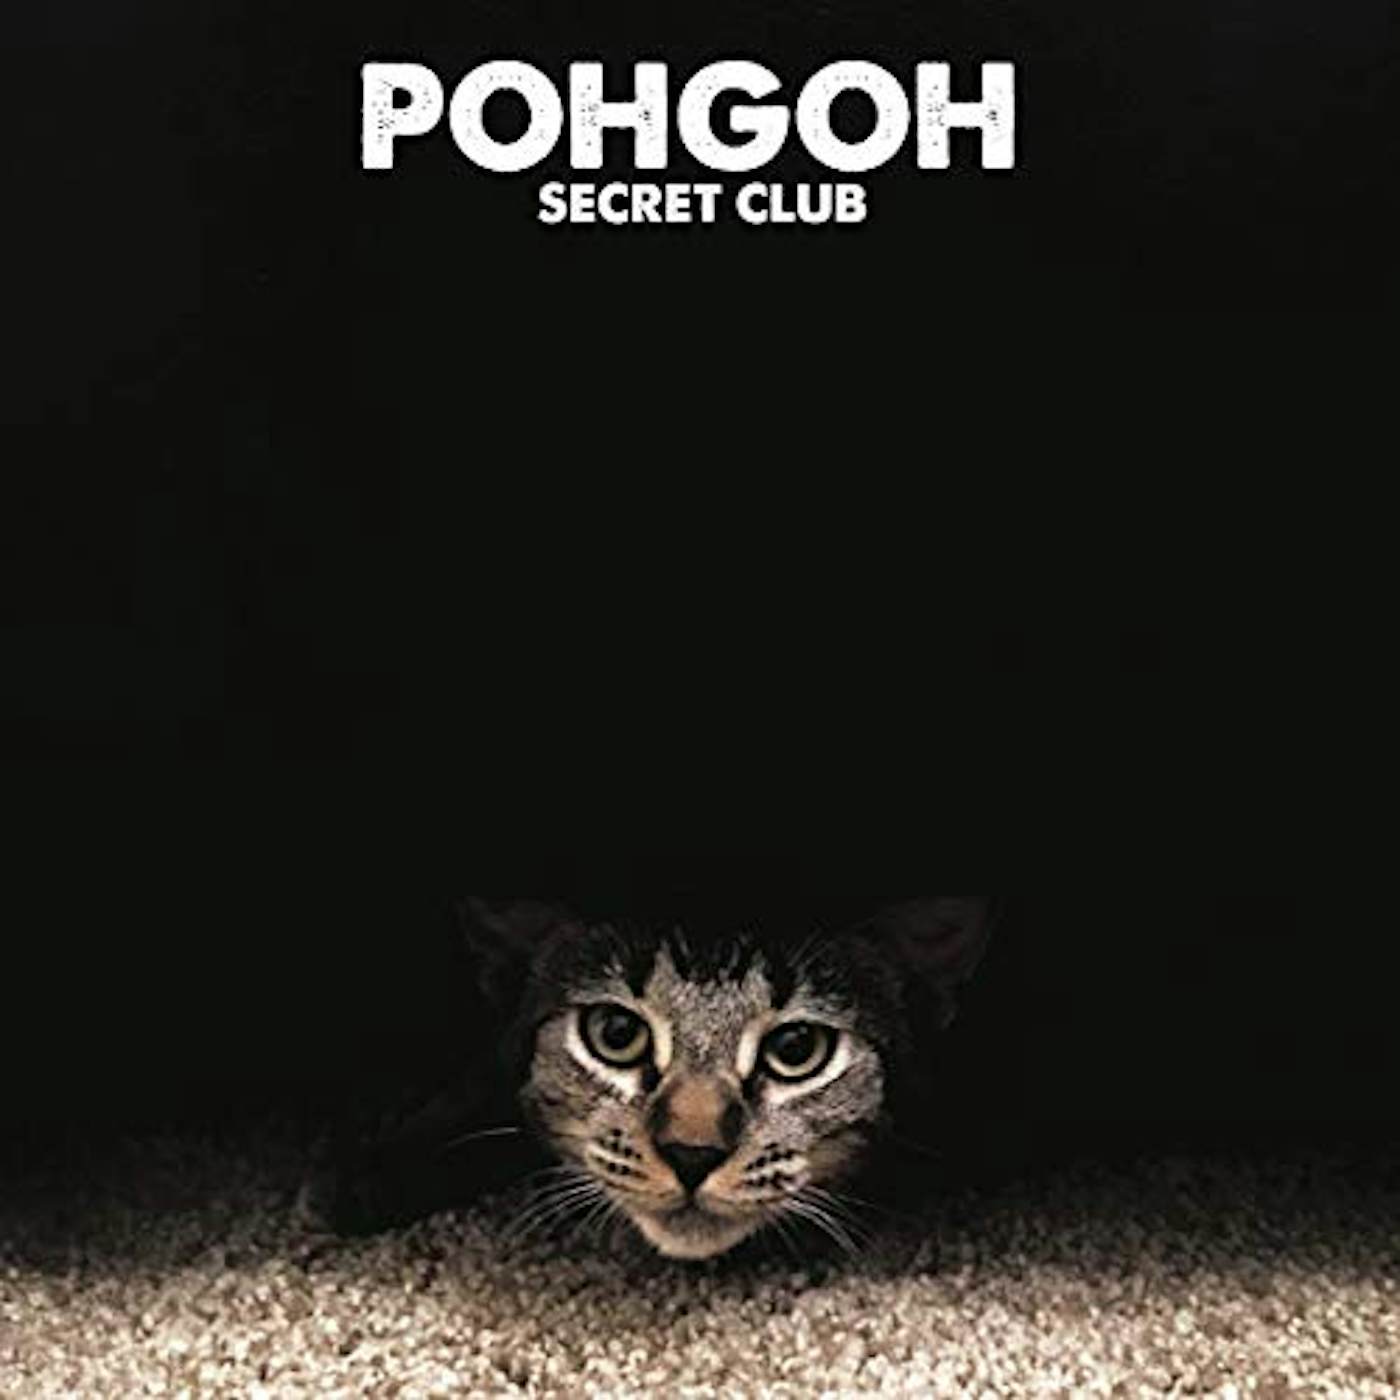 Pohgoh Secret Club Vinyl Record